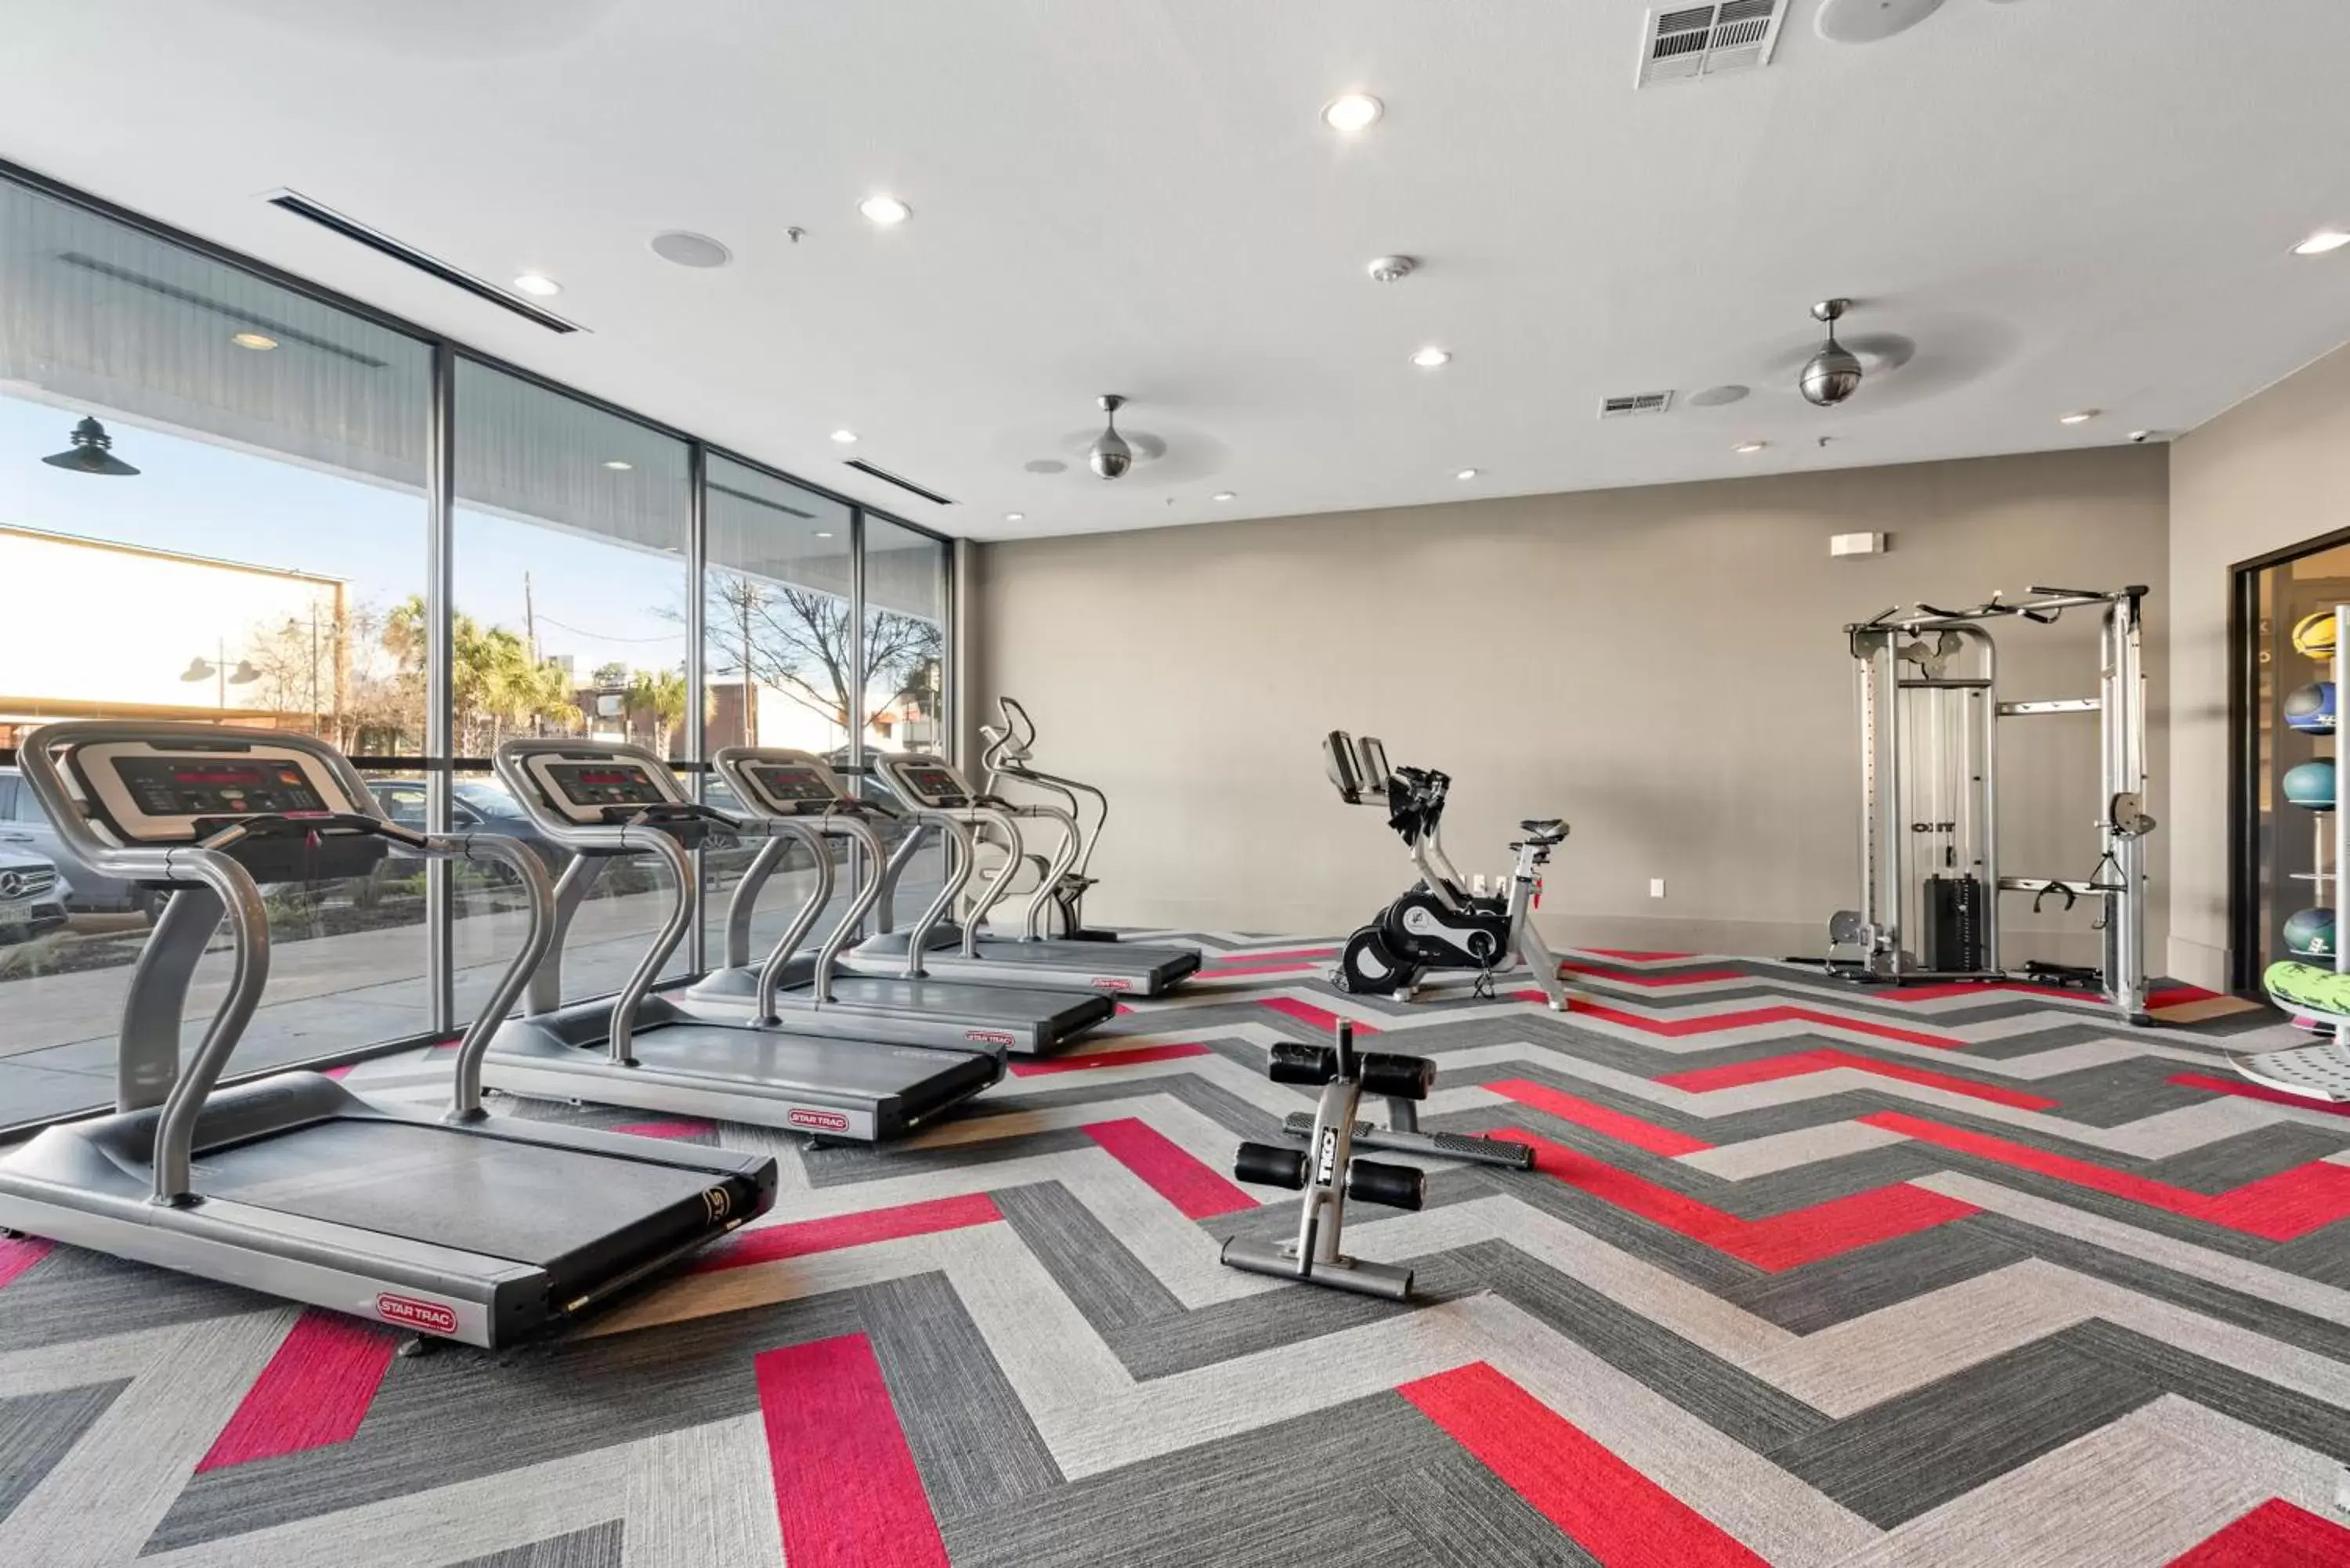 Fitness centre/facilities, Fitness Center/Facilities in Kasa Highland Park Dallas